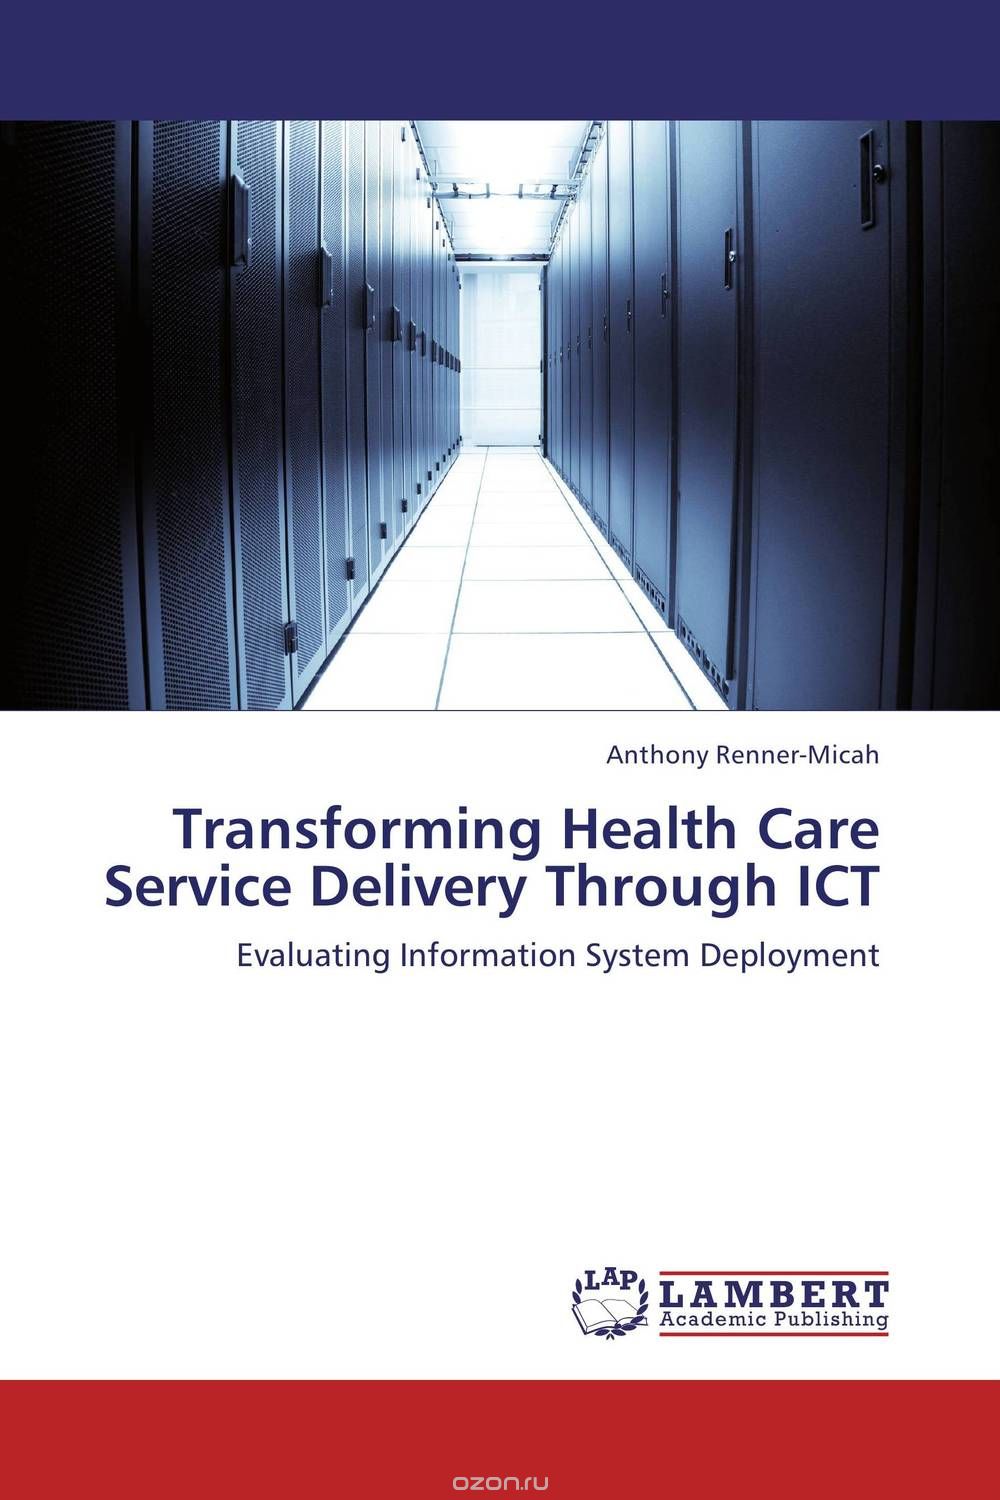 Скачать книгу "Transforming Health Care Service Delivery Through ICT"